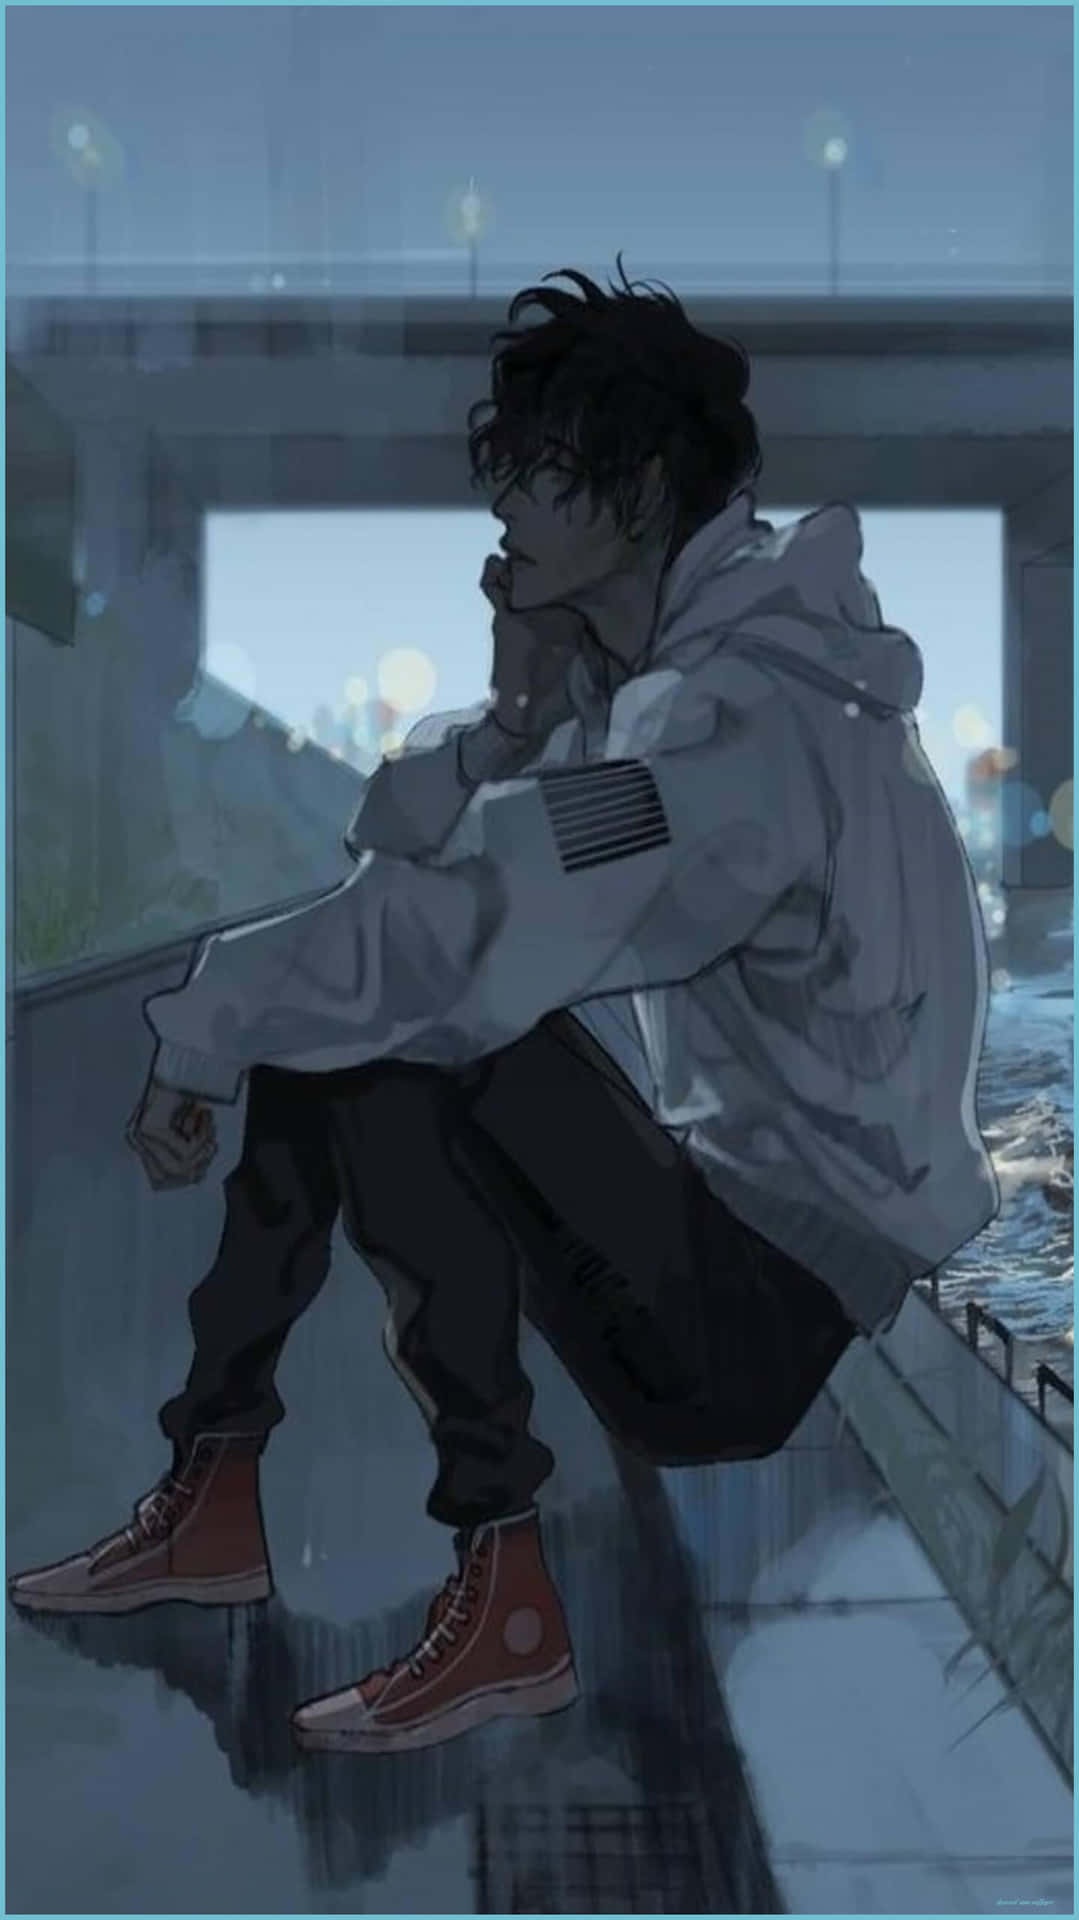 Sad Depressing Anime Boy Alone